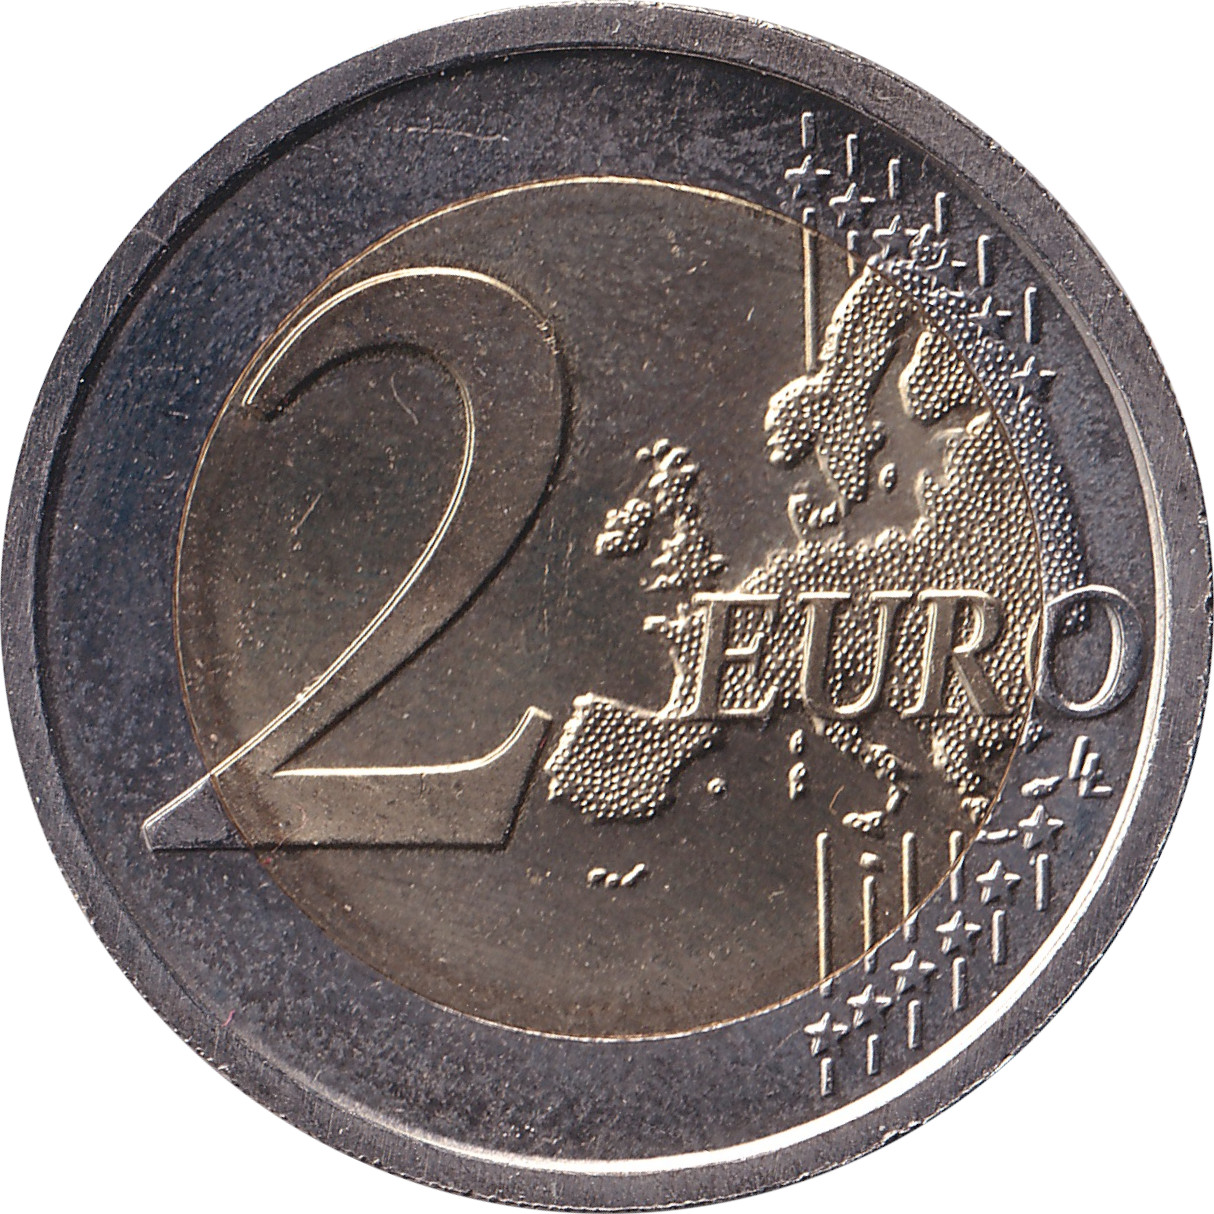 2 euro - Benoît XVI